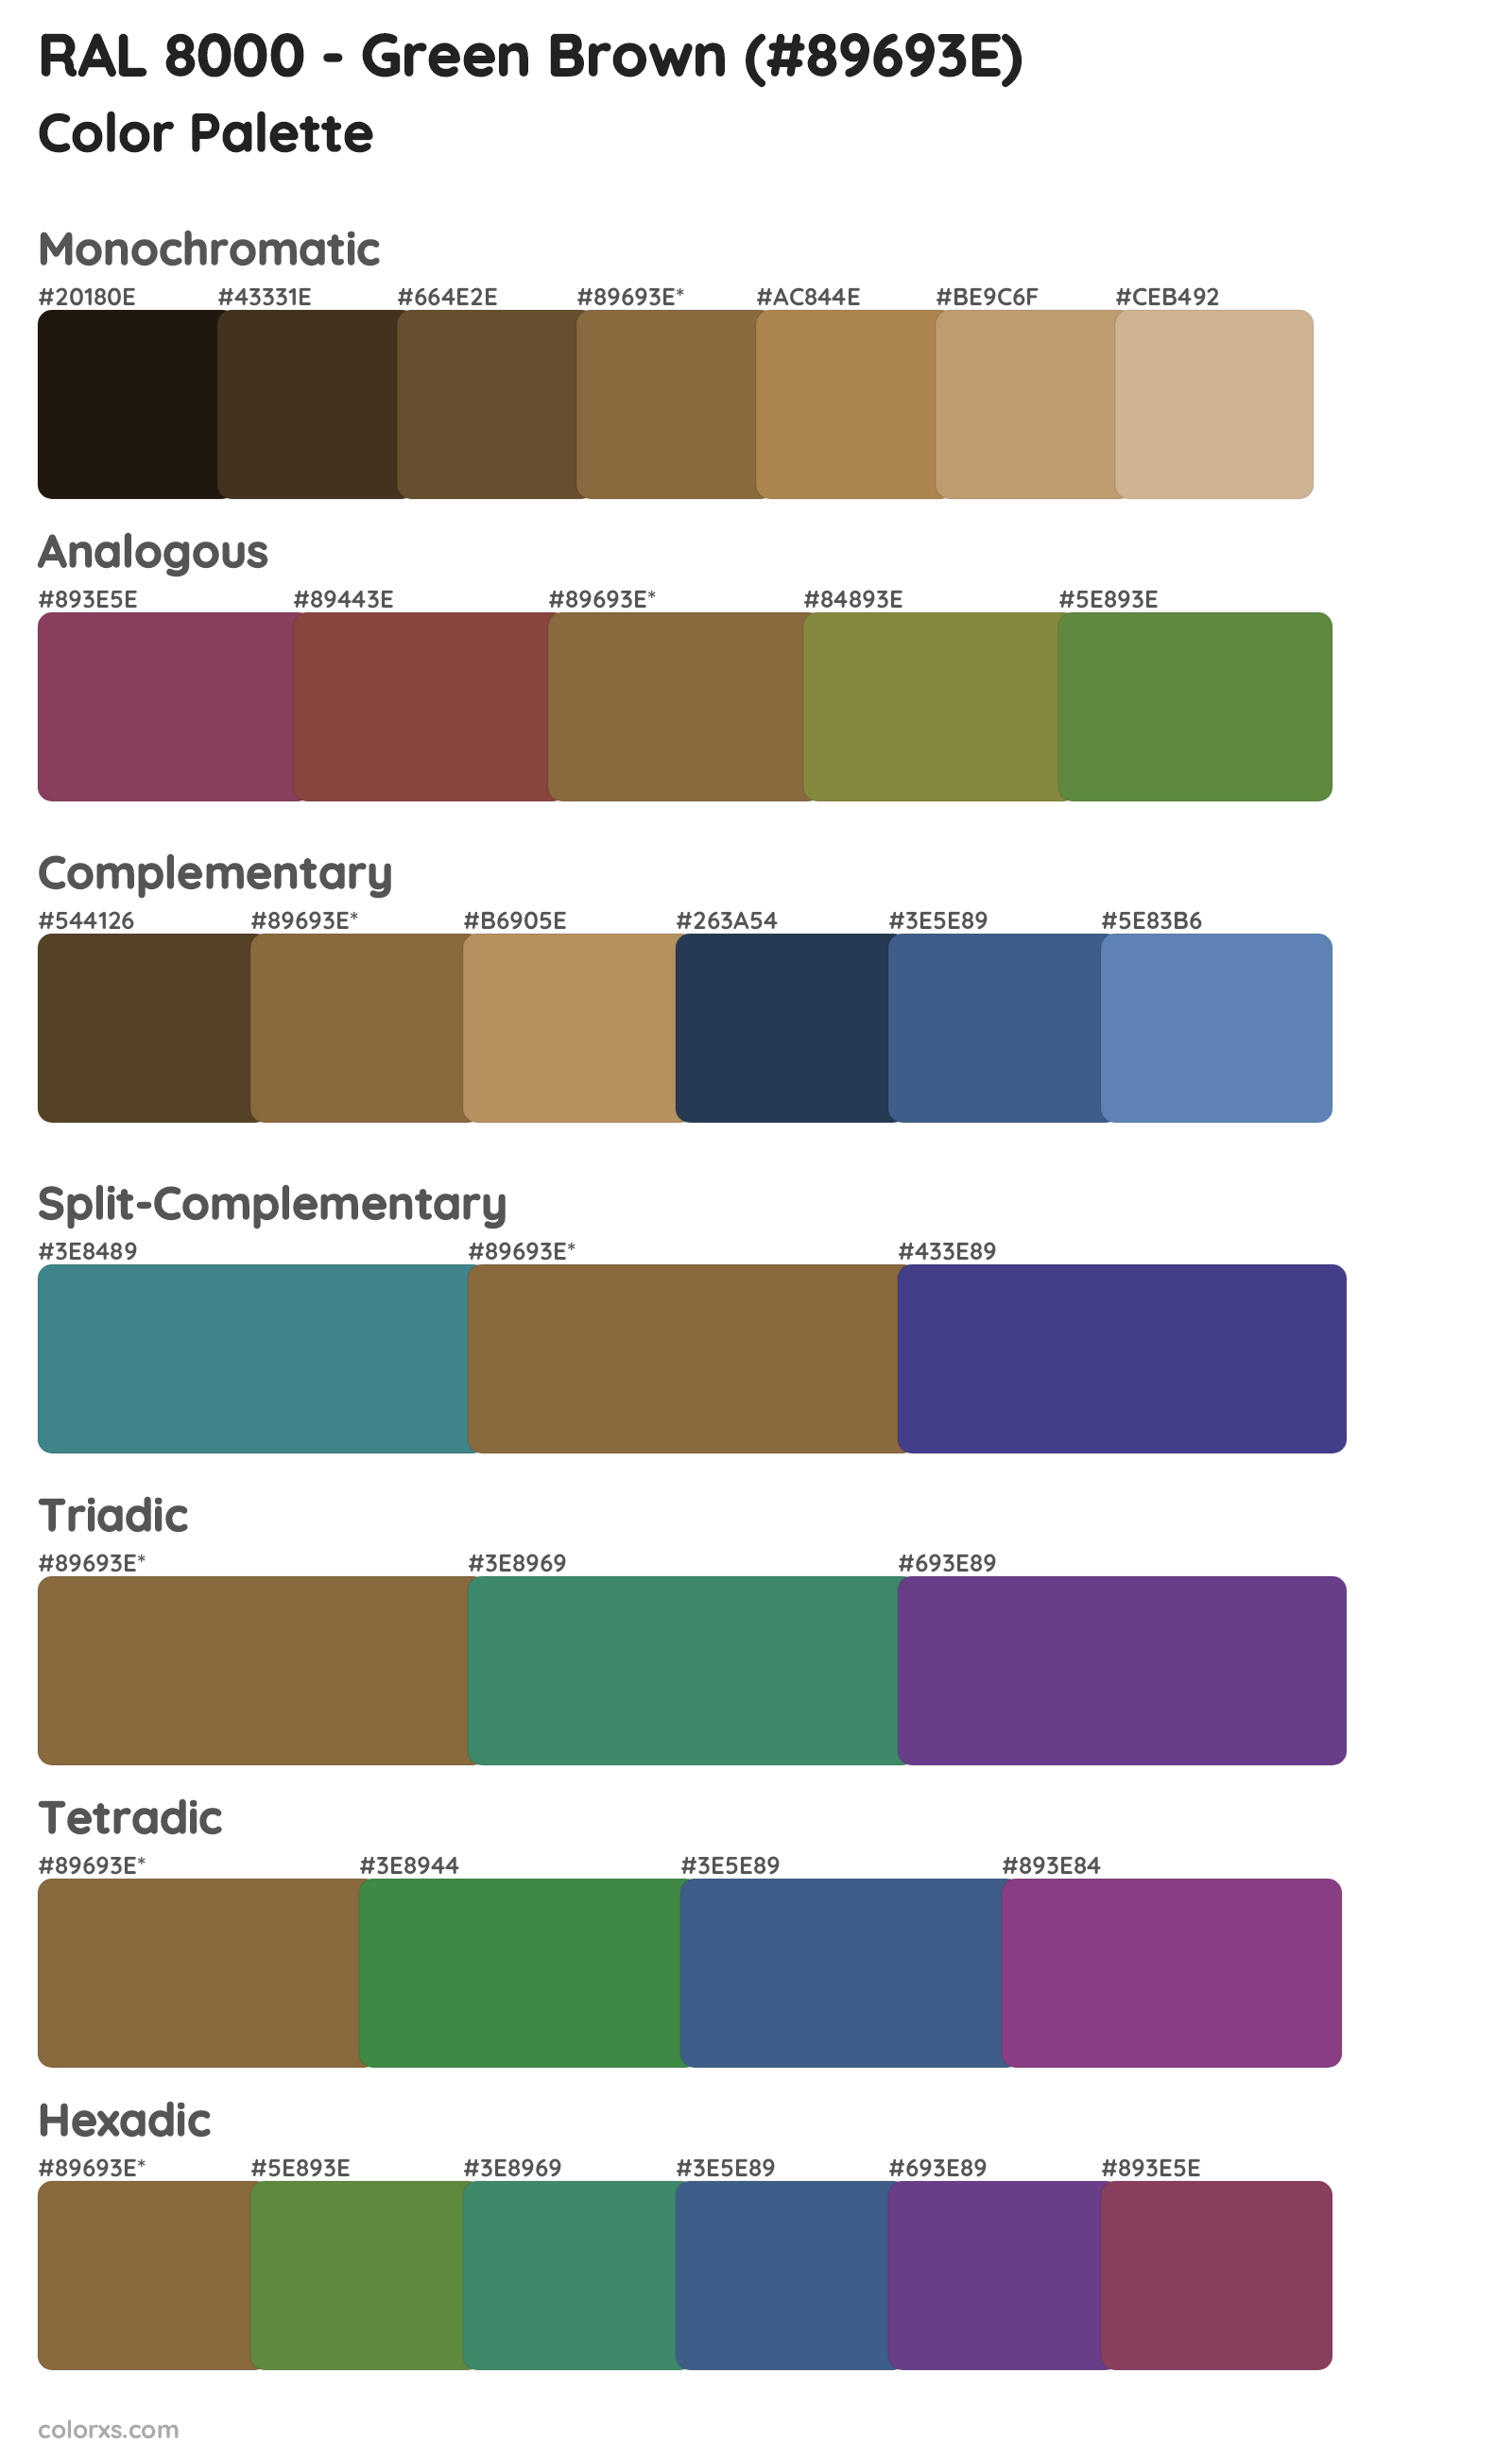 RAL 8000 - Green Brown Color Scheme Palettes